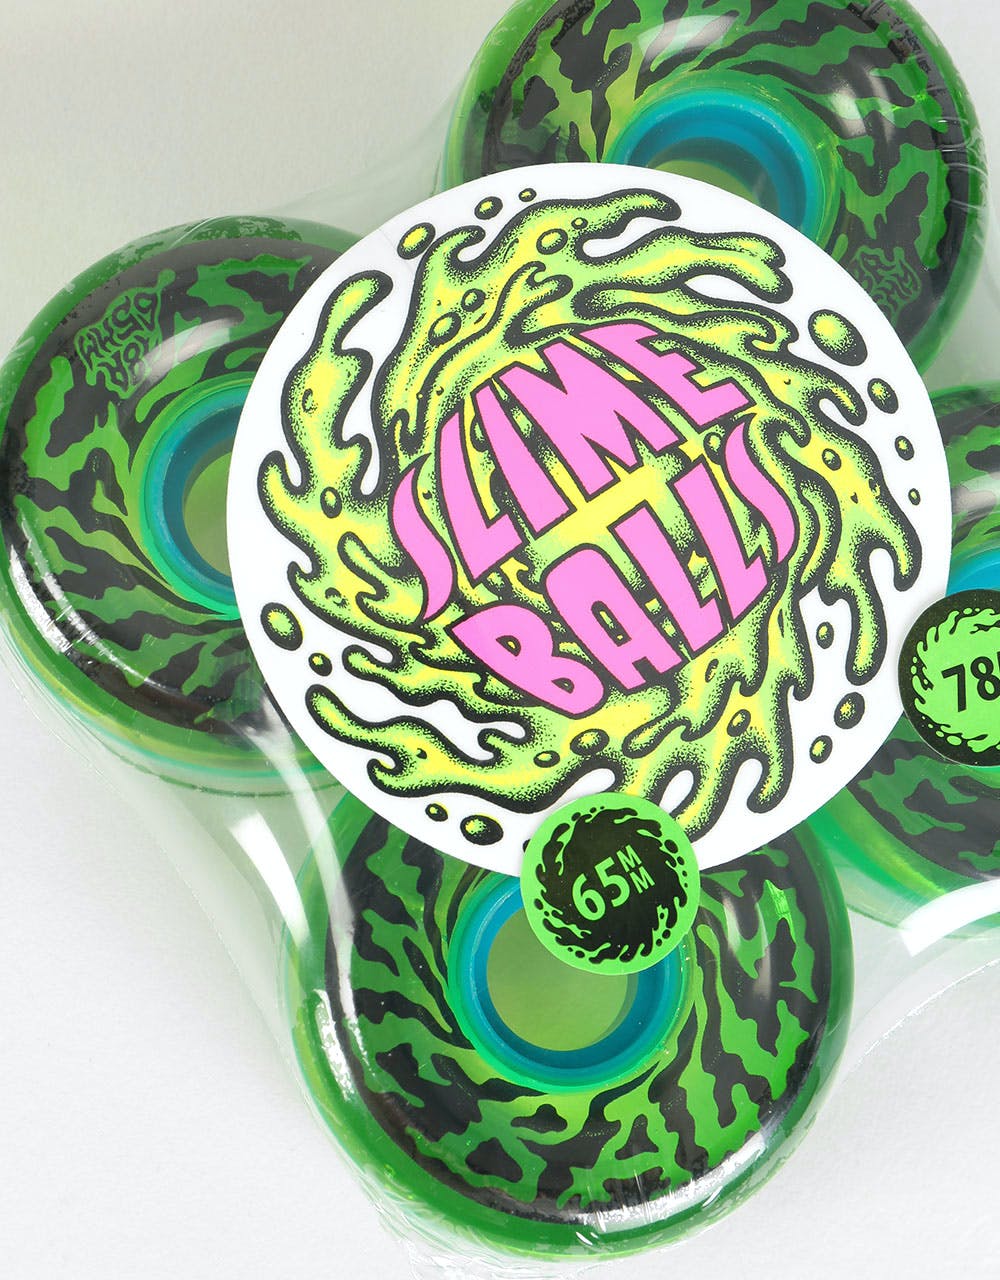 Santa Cruz Slime Balls Trans Swirl 78a Skateboard Wheel - 65mm